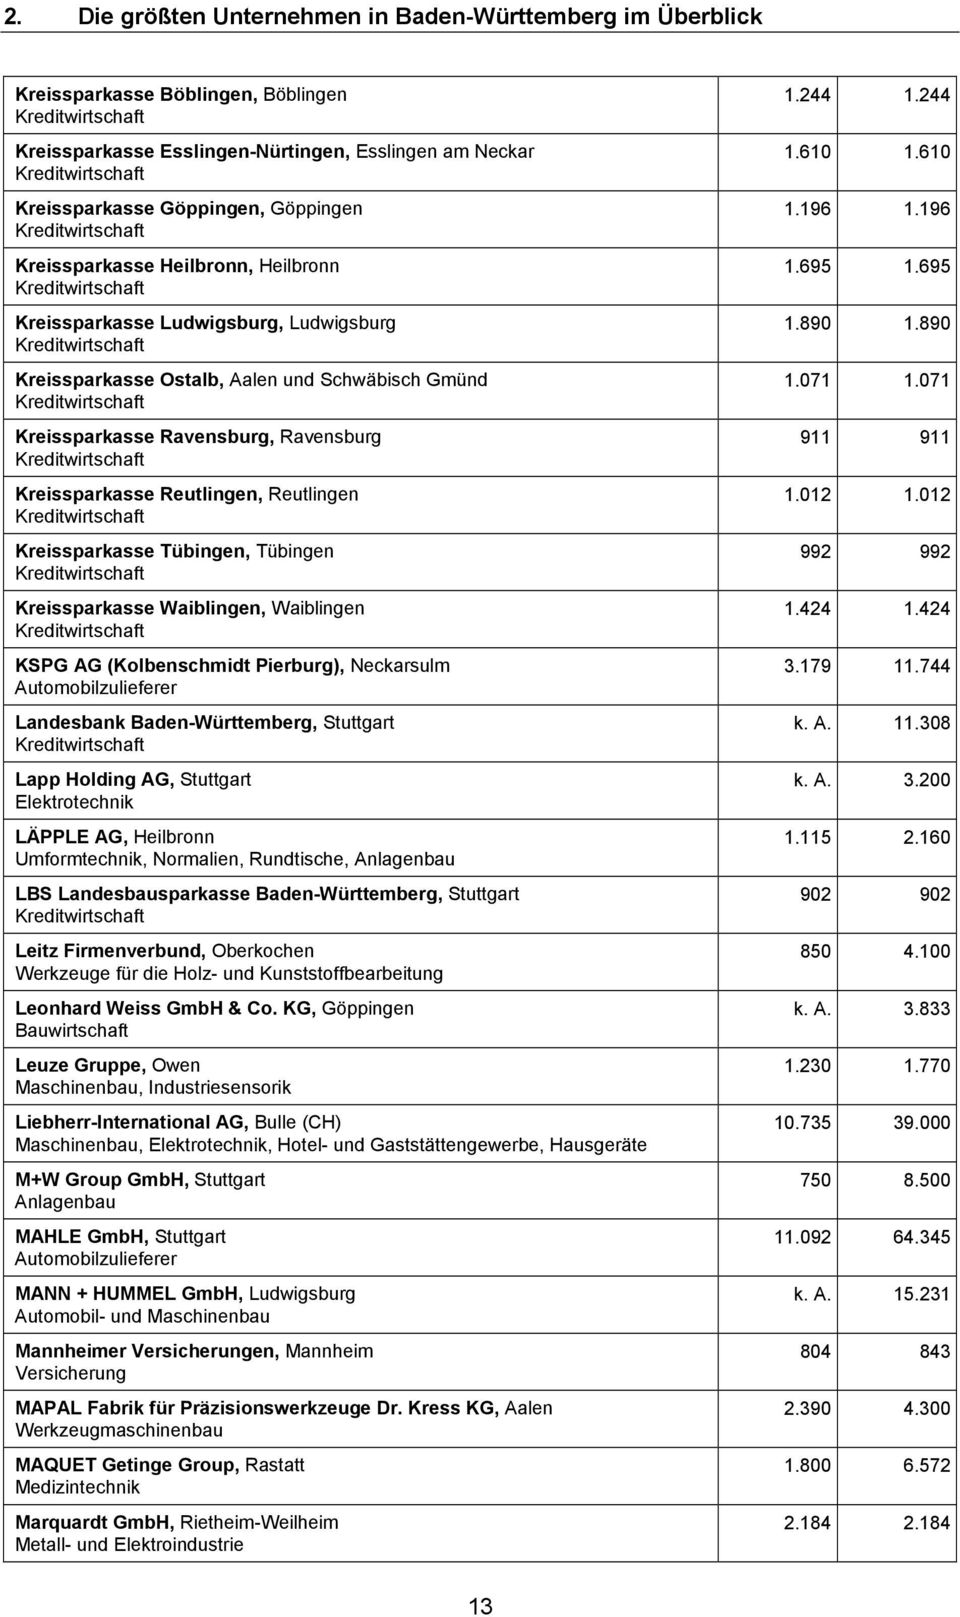 Reutlingen Kreissparkasse Tübingen, Tübingen Kreissparkasse Waiblingen, Waiblingen KSPG AG (Kolbenschmidt Pierburg), Neckarsulm Automobilzulieferer Landesbank Baden-Württemberg, Stuttgart Lapp